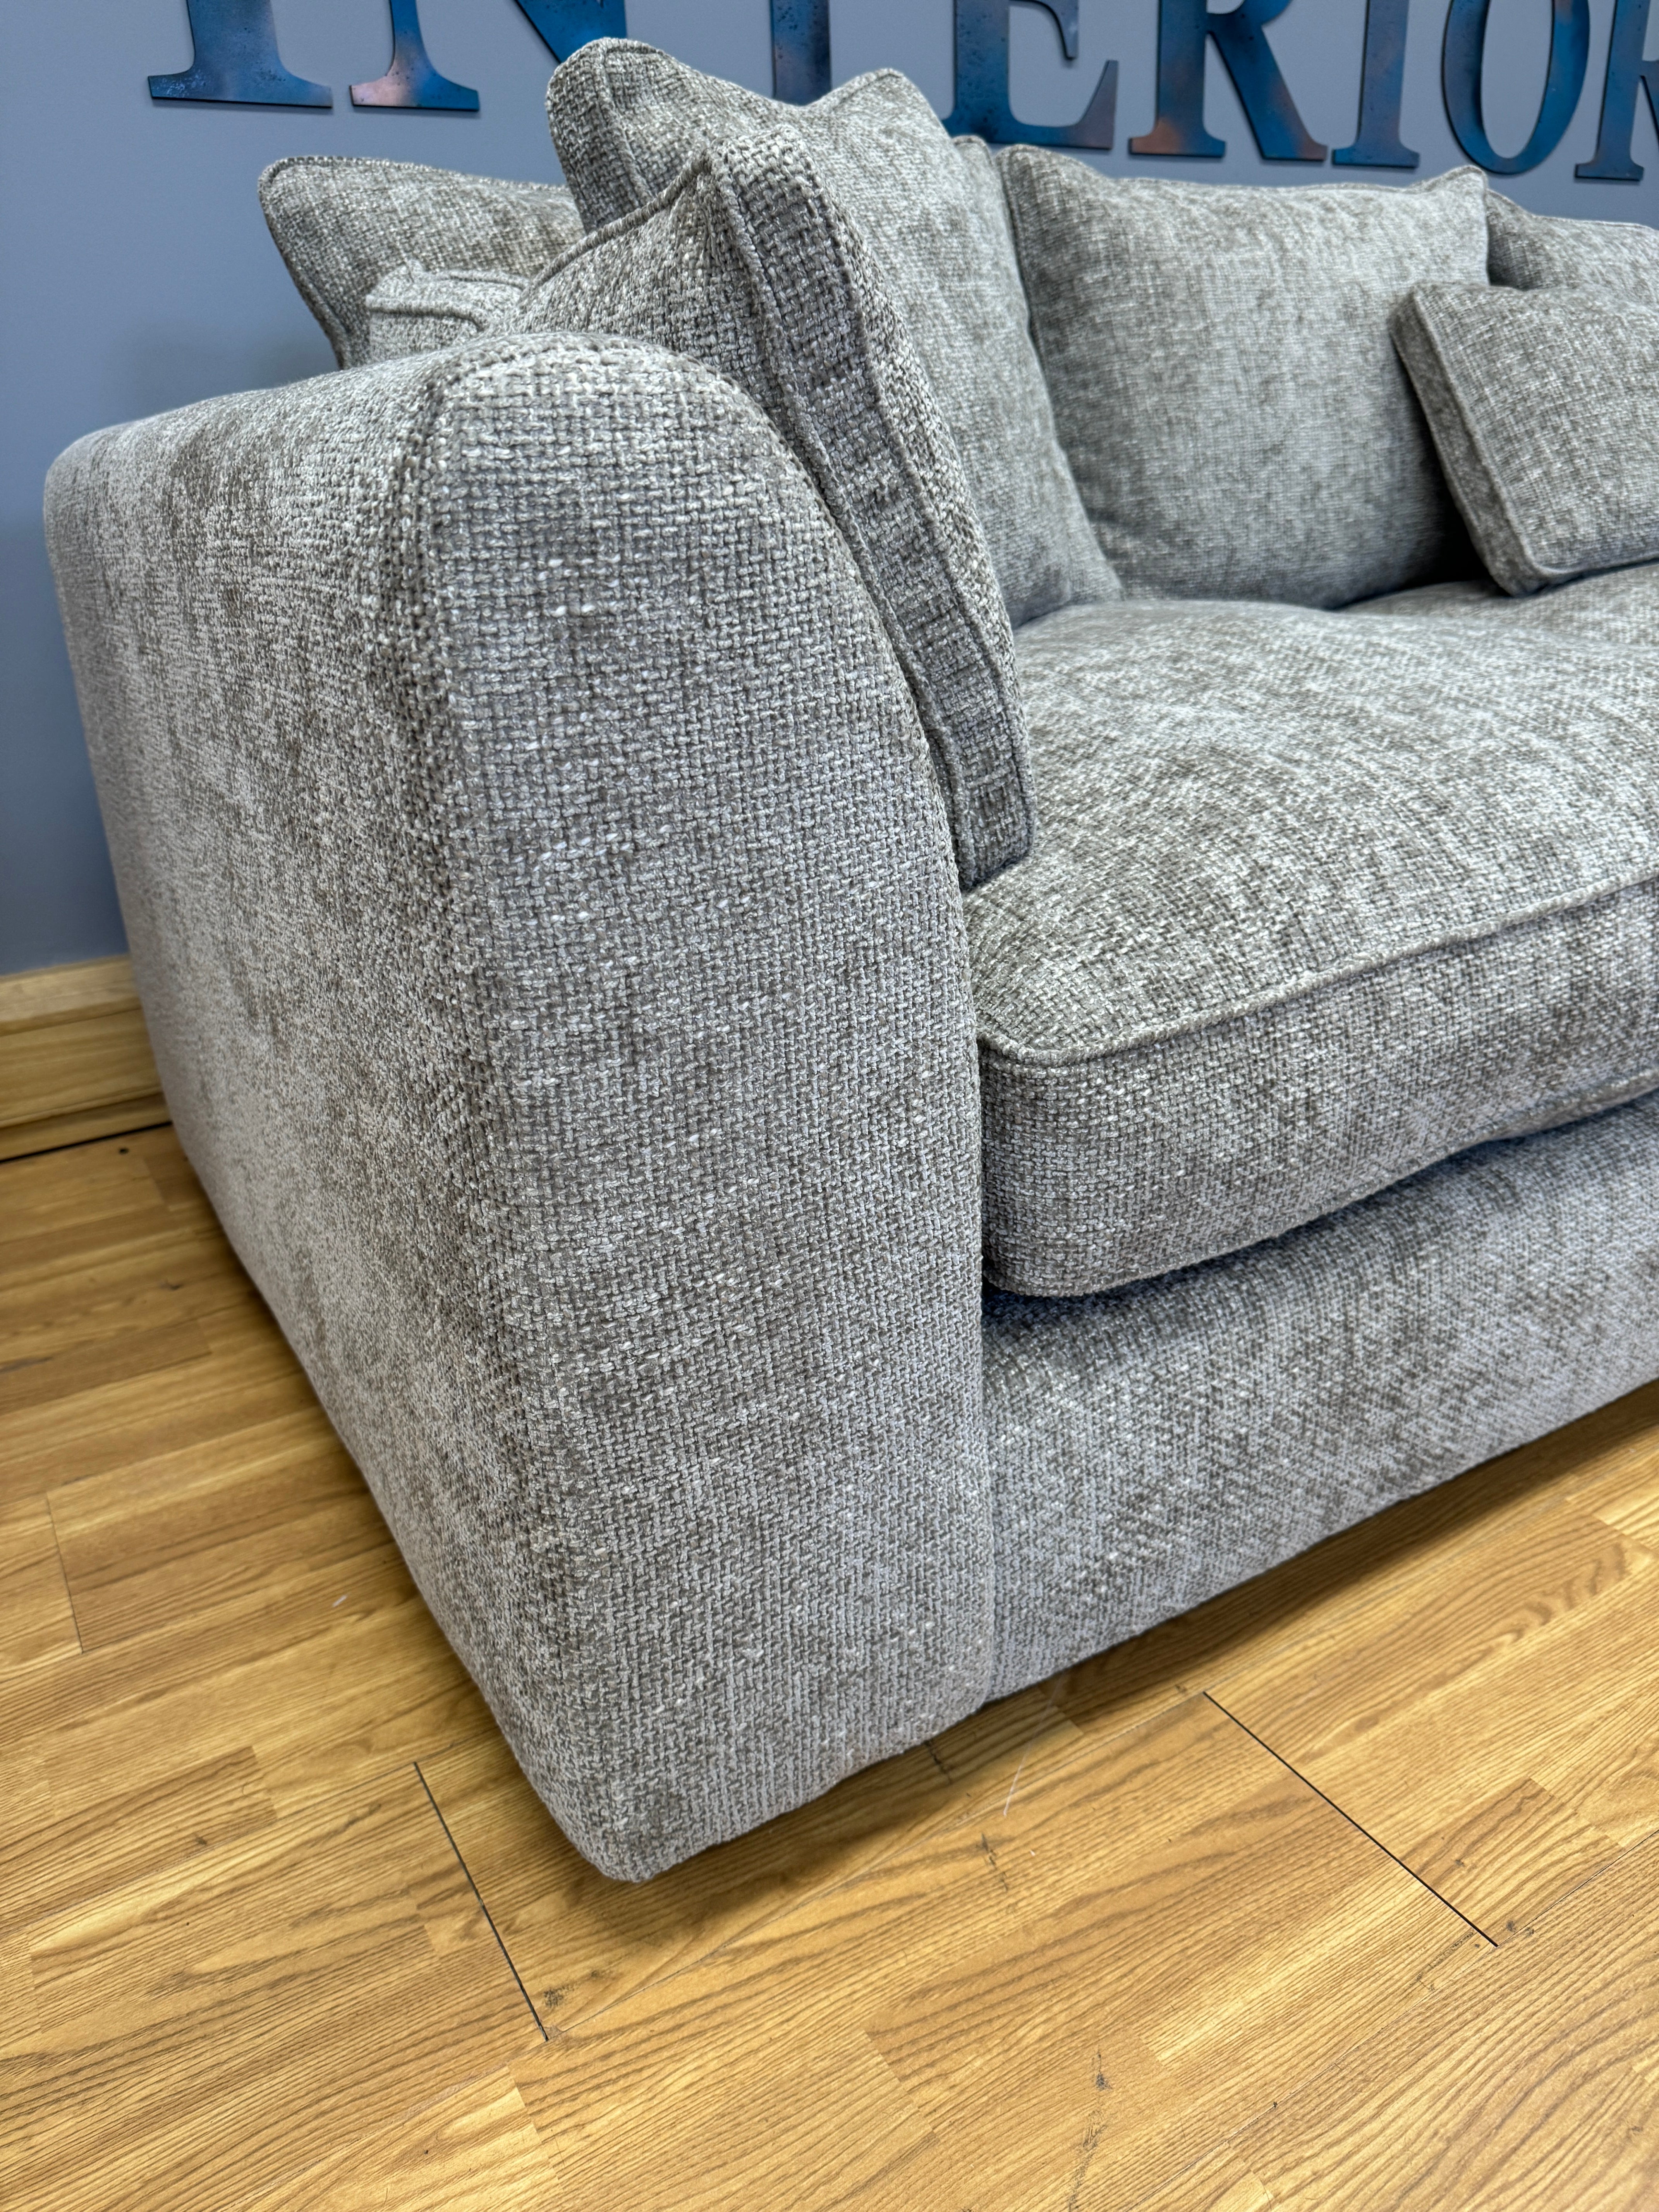 BOSSANOVA XL right facing chaise sofa in natural stone chenille weave fabric